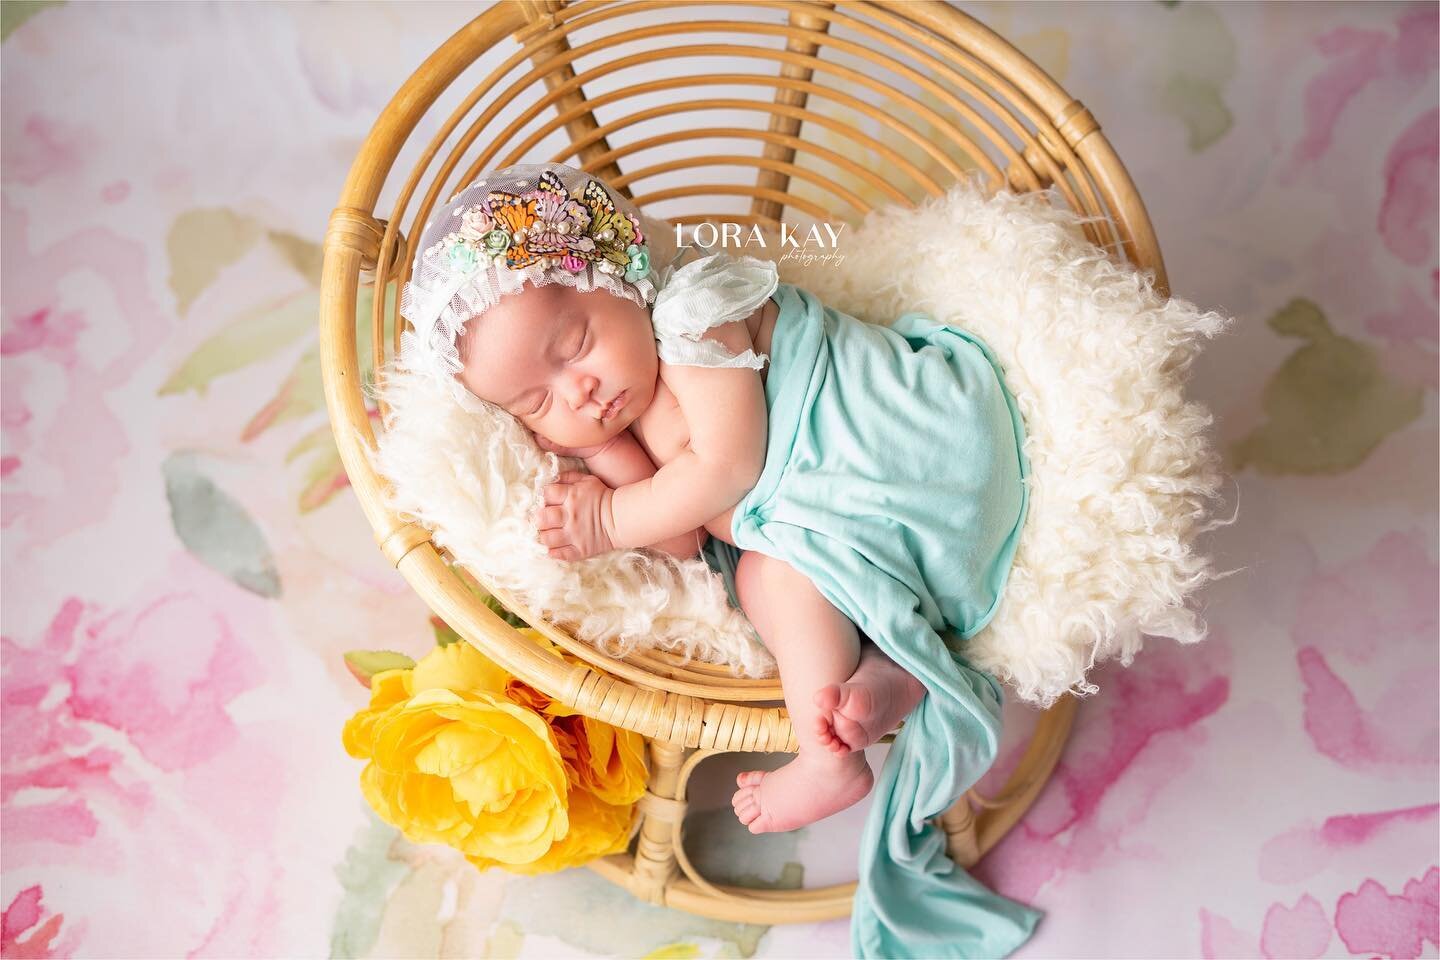 Violet 💜
Such a beautiful baby 🥰
#newbornphotography #lorakayphotography #lorakaynewborn #lorakayphotos #babyfever #summercolors #butterflies #newbornphotography #explorepage #explore #sweetdreams #njphotographer #flphotographer #newborn